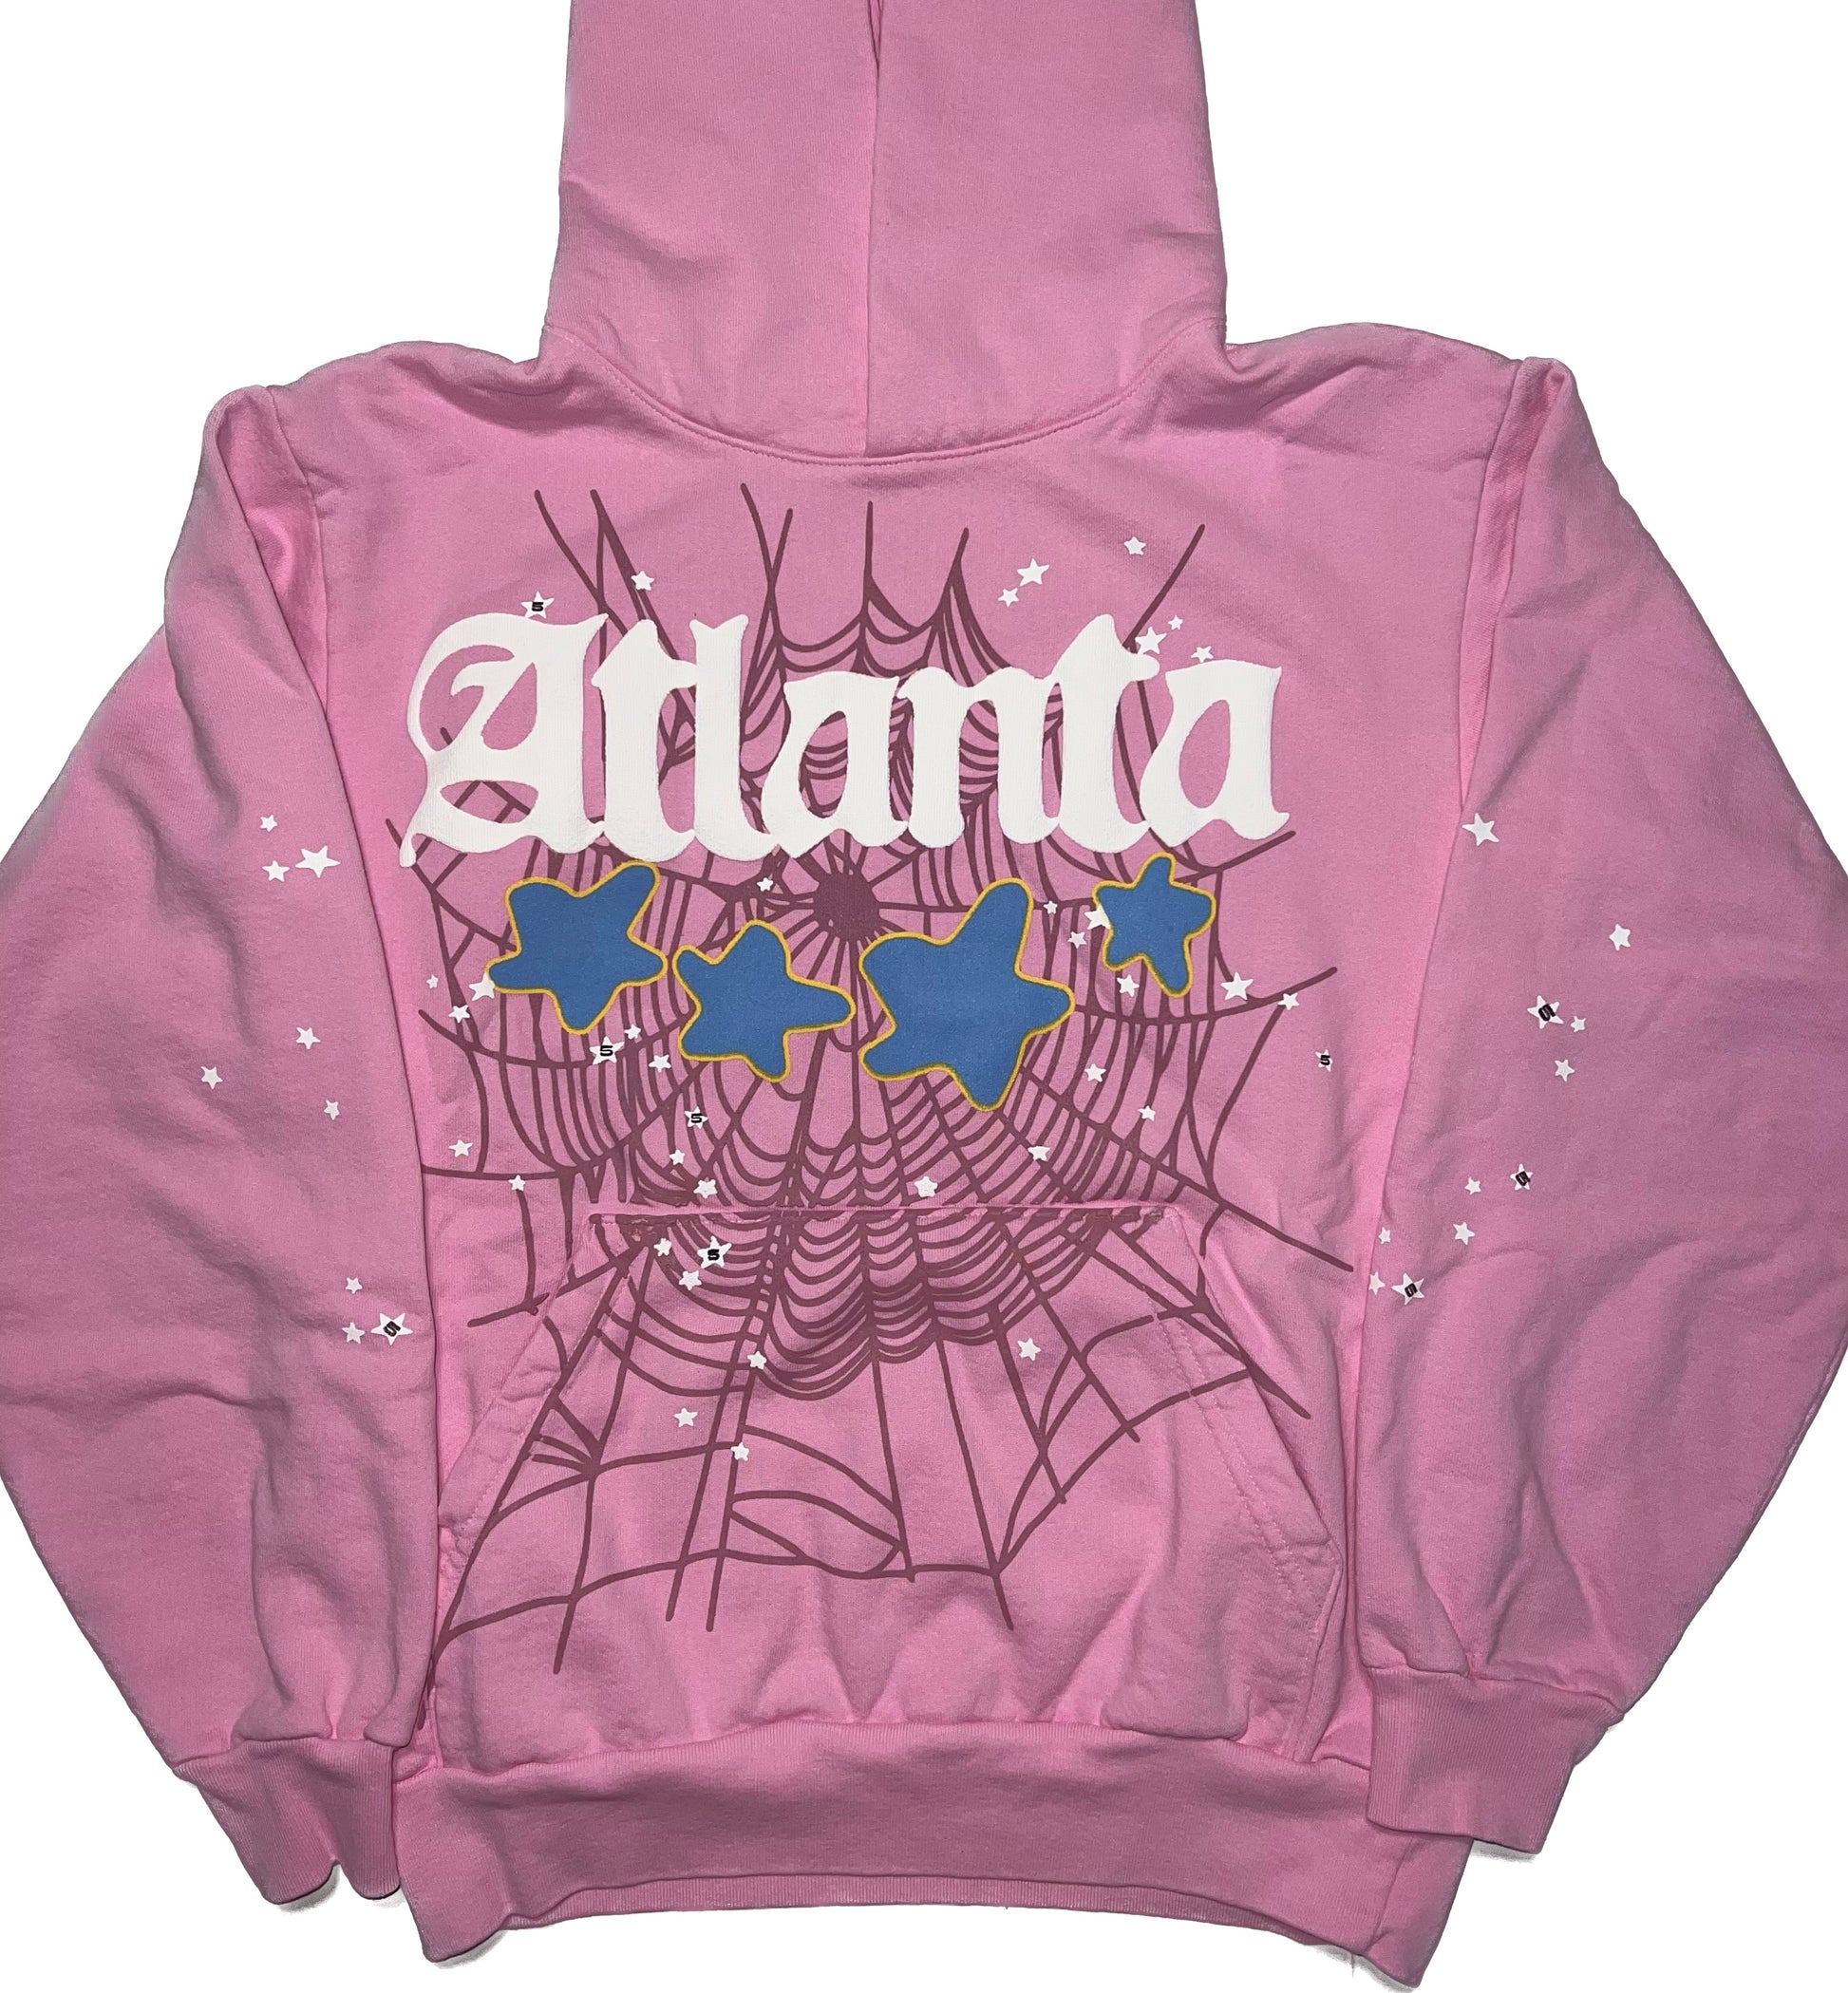 Sp5der Atlanta Sweatpants Pink